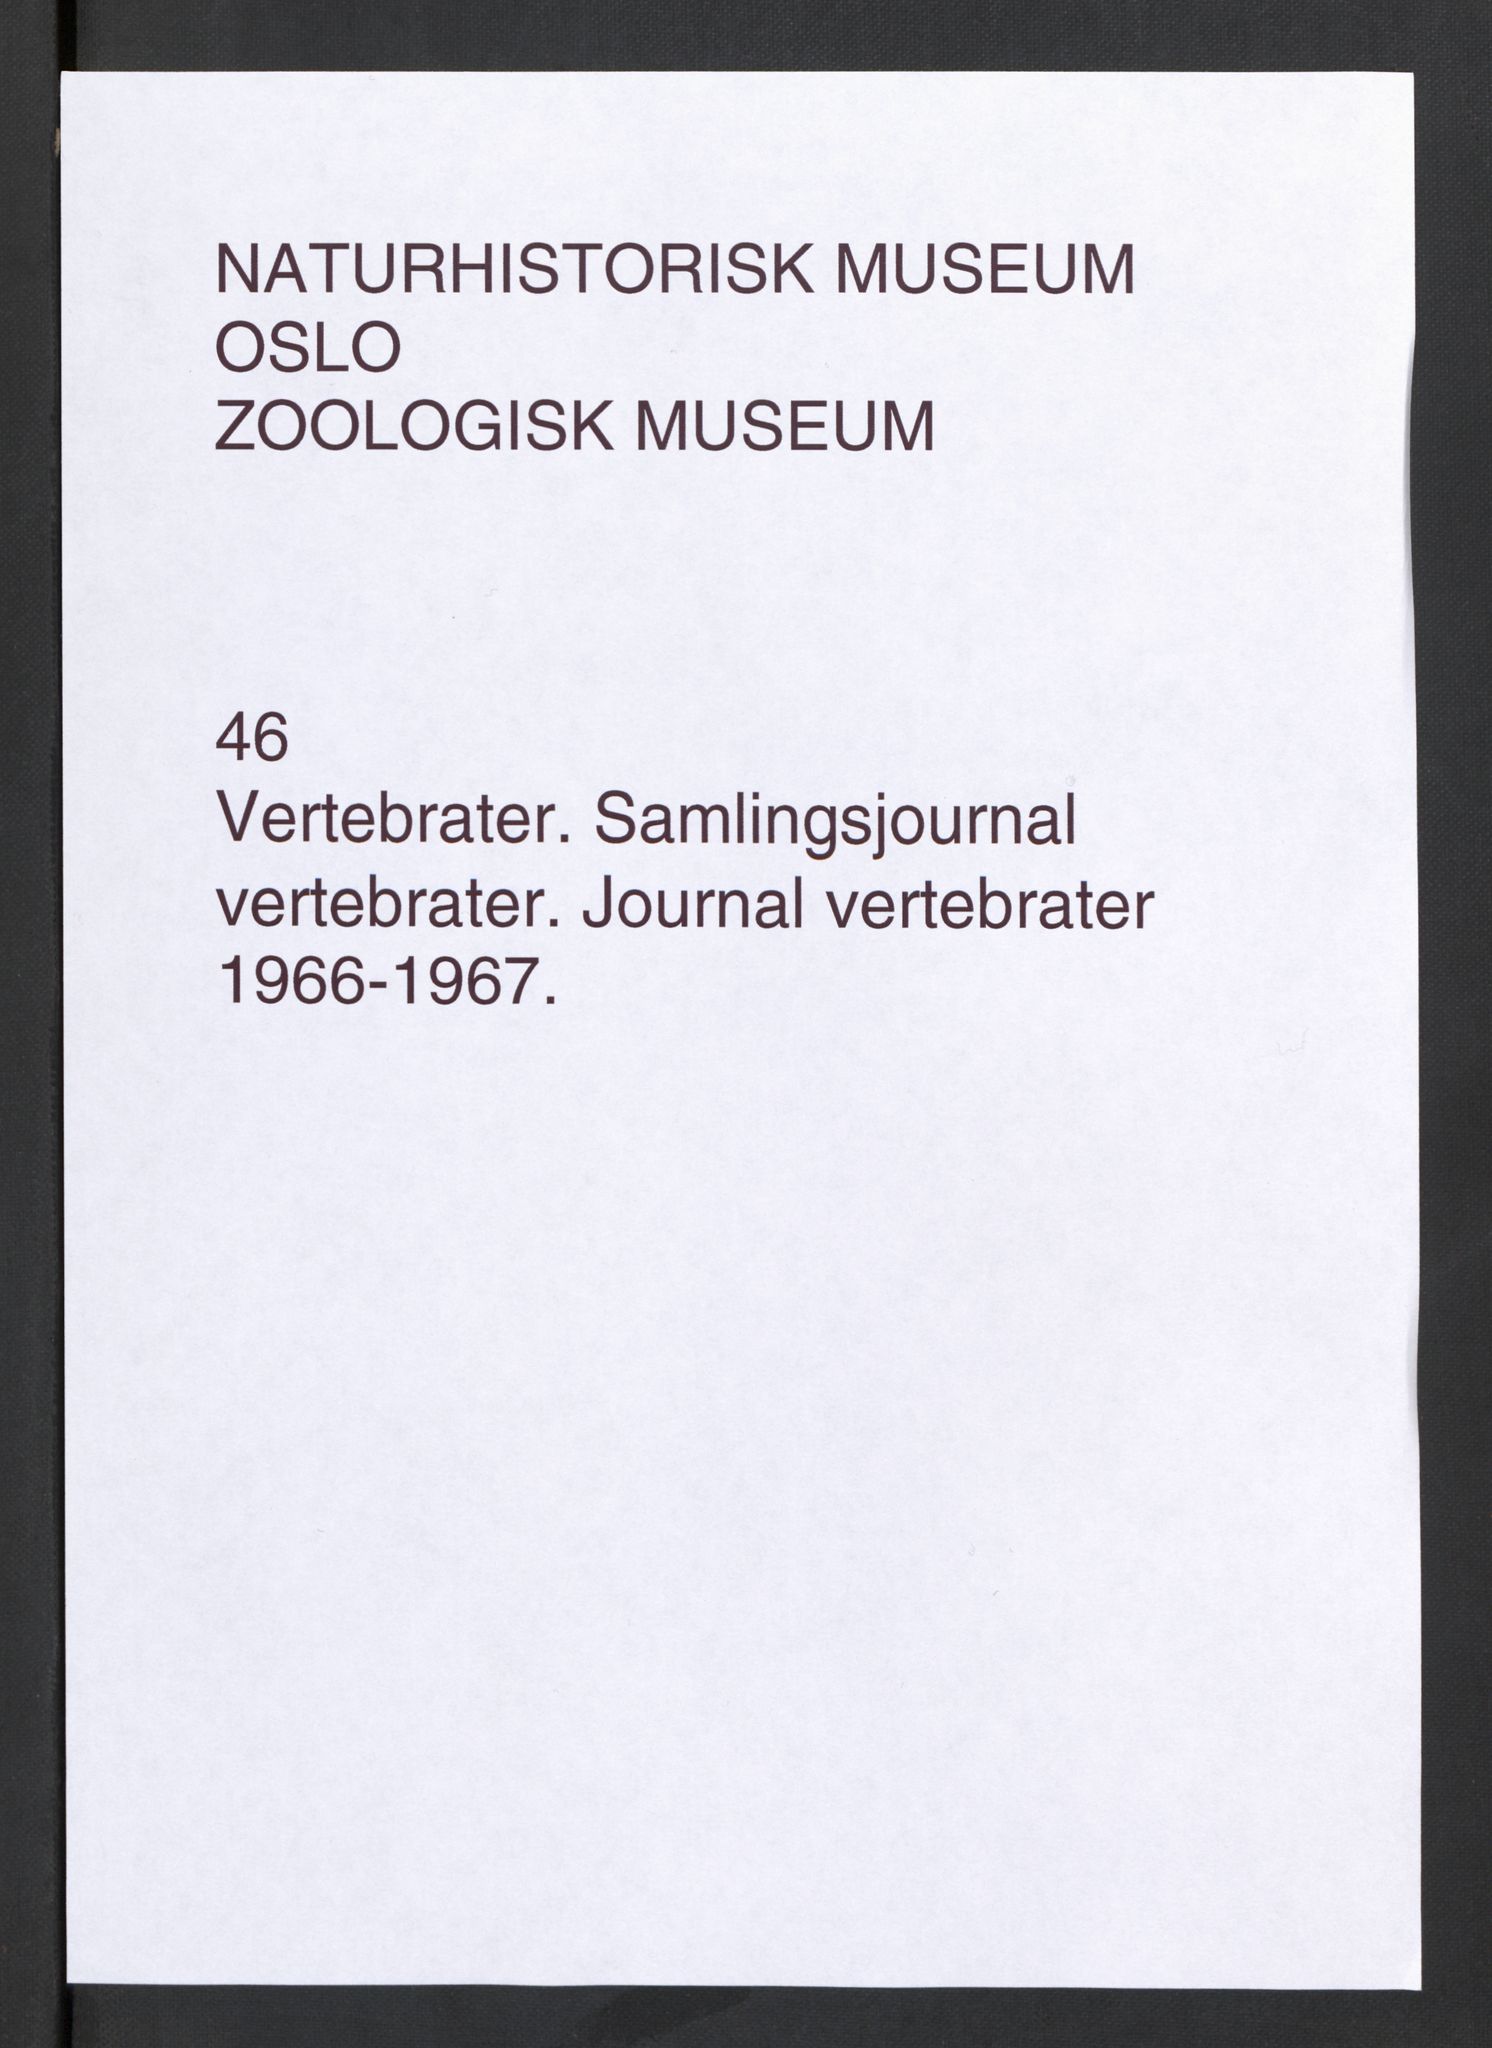 Naturhistorisk museum (Oslo), NHMO/-/5, 1966-1967